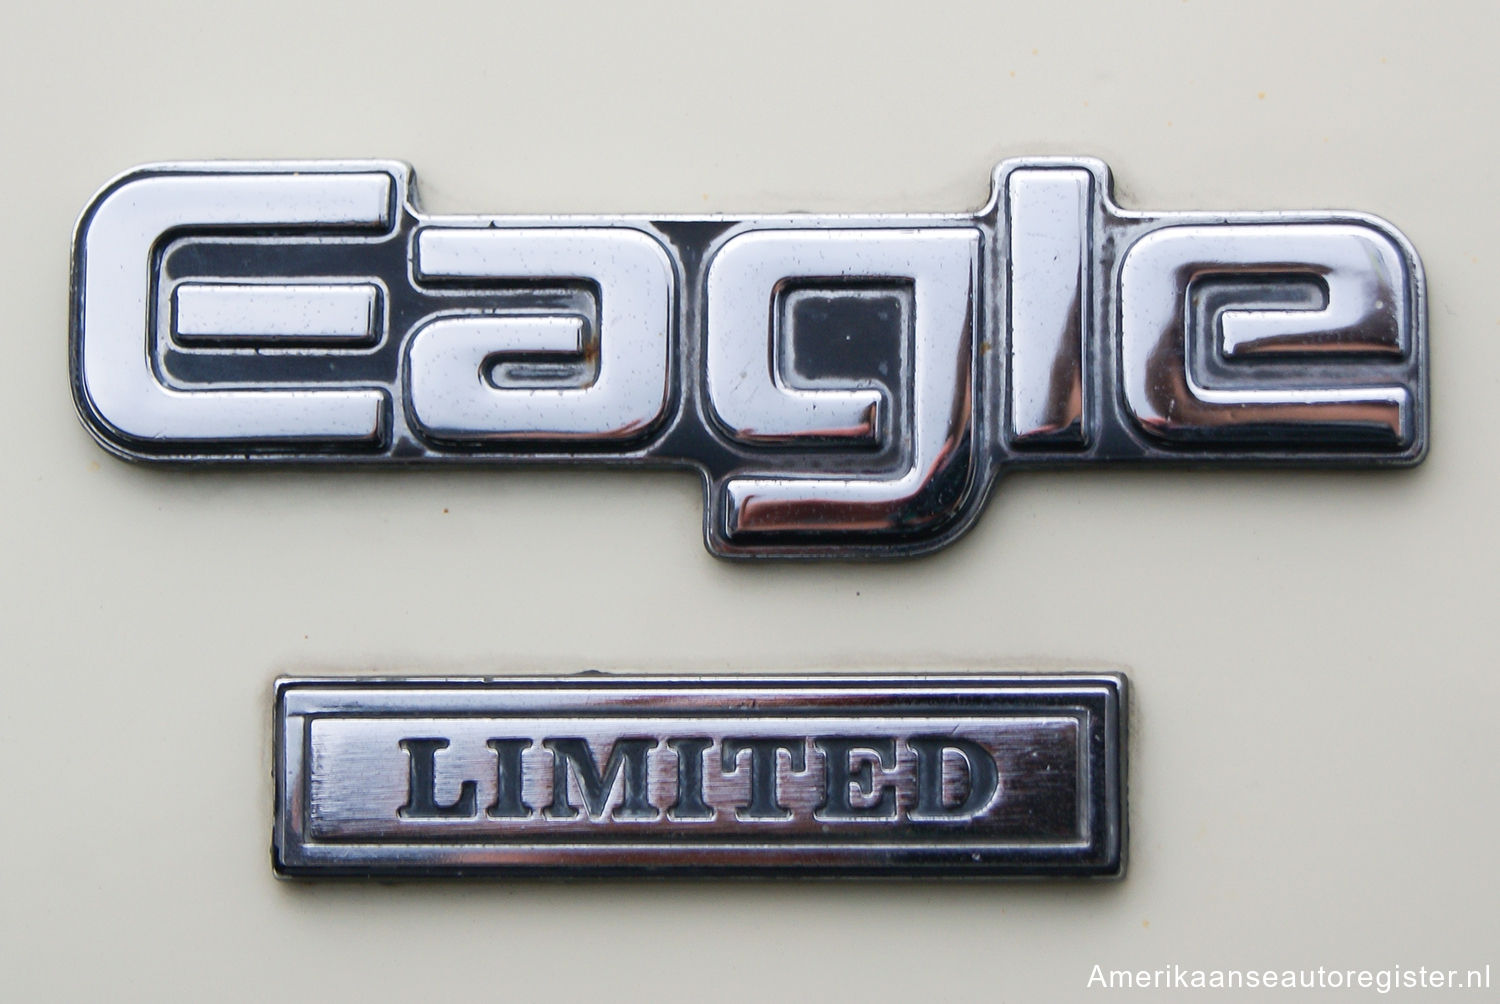 Amc Eagle uit 1981